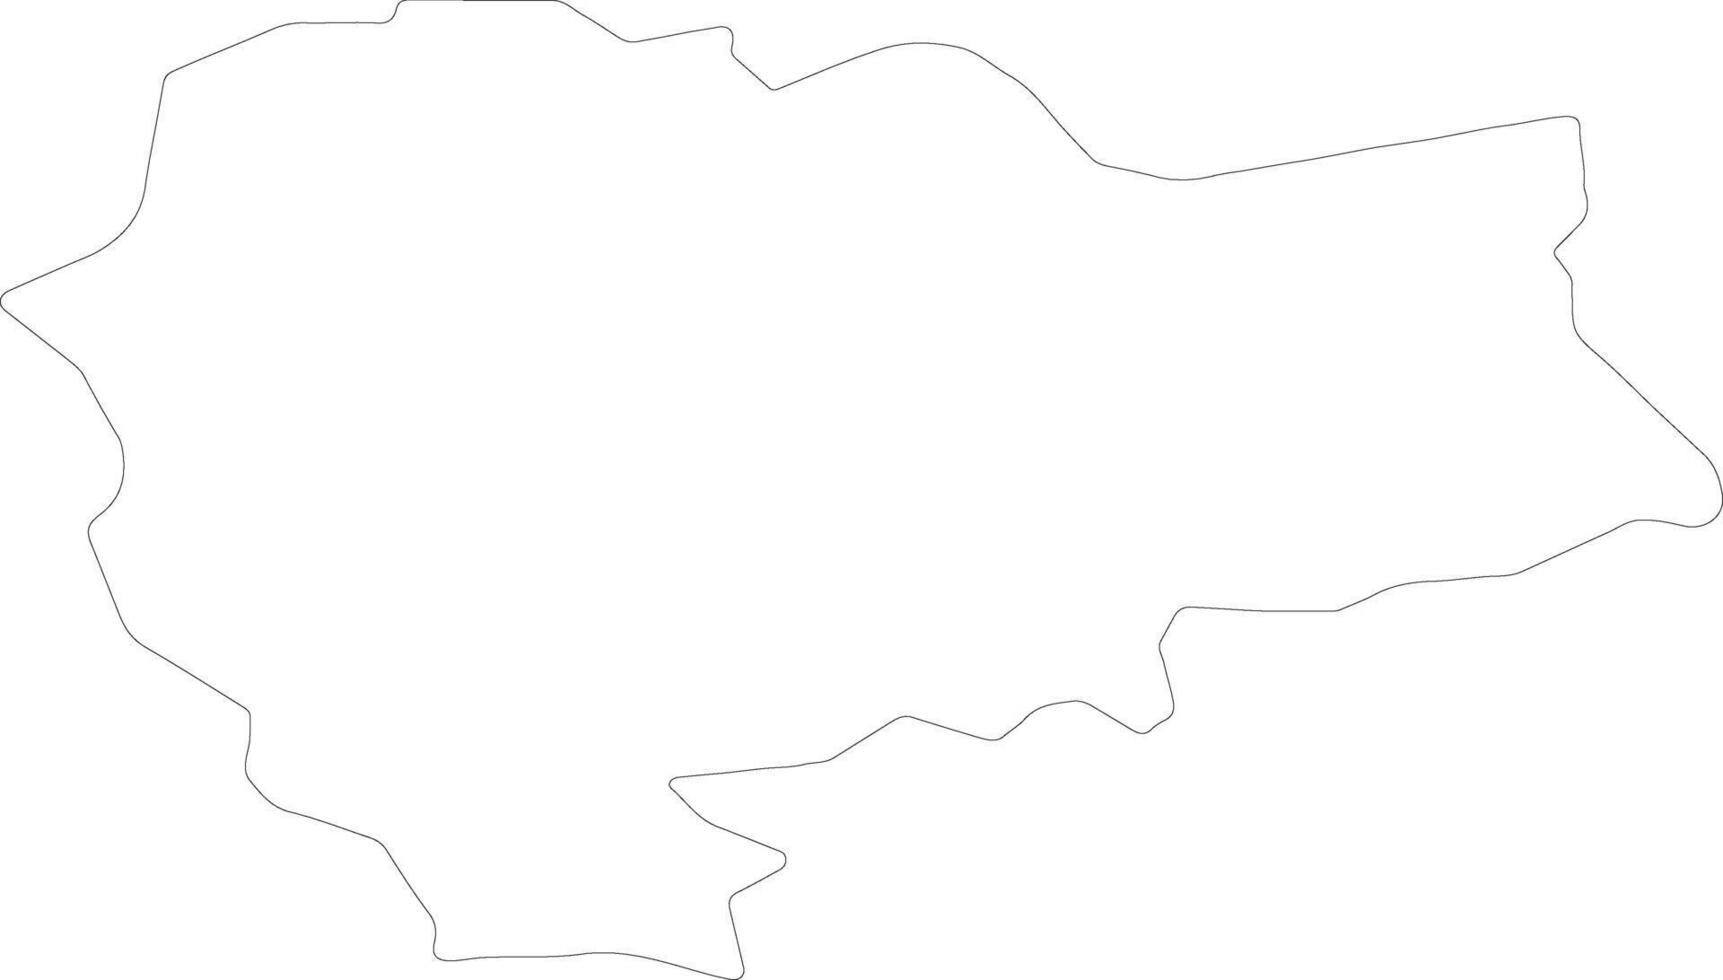 Ballymoney United Kingdom outline map vector